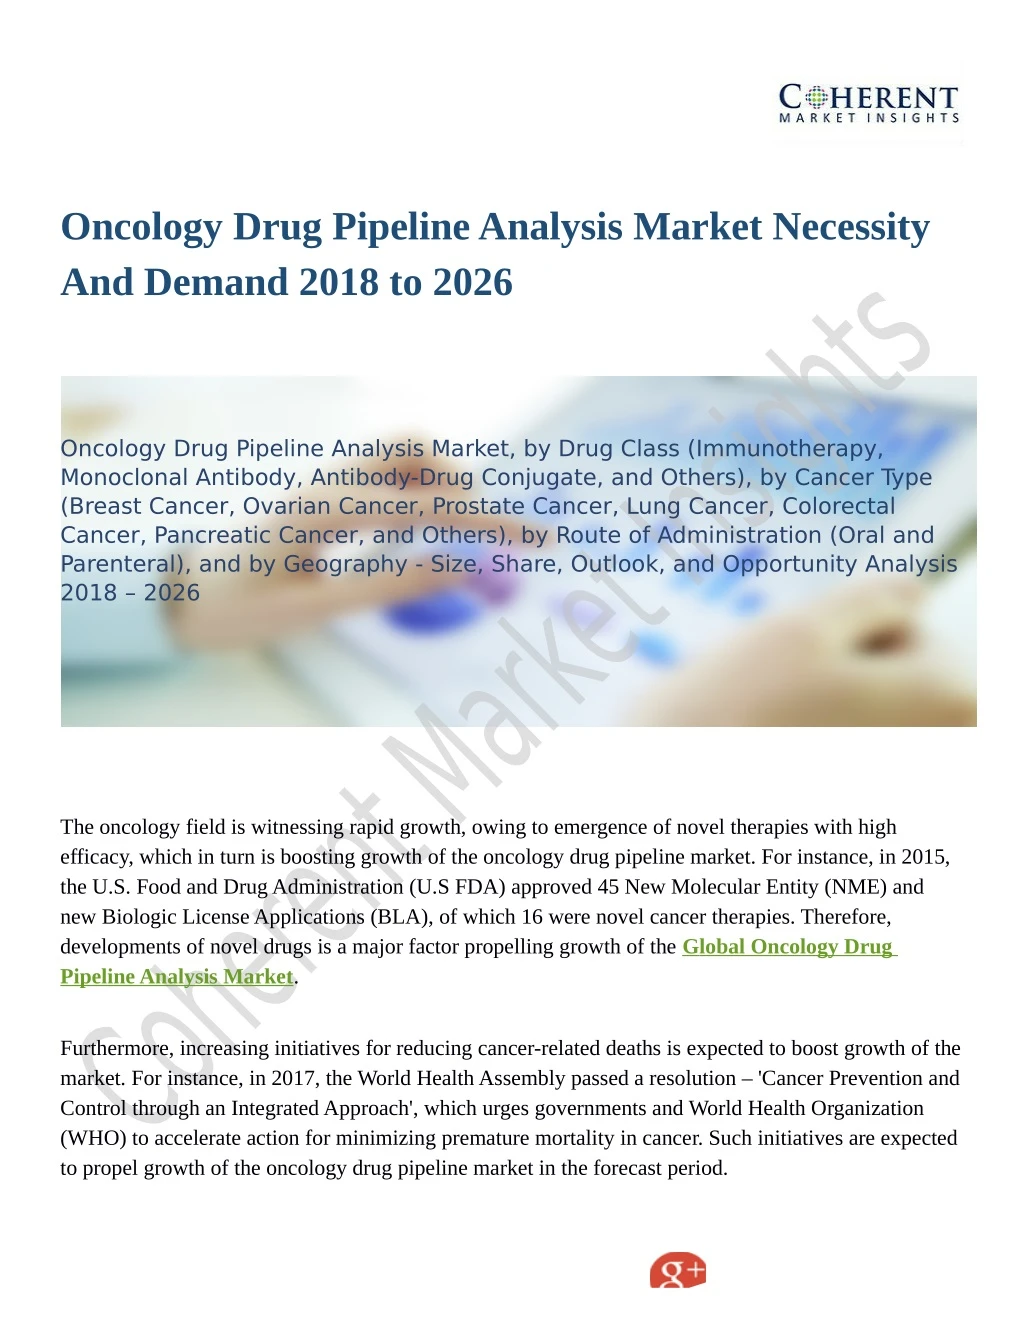 oncology drug pipeline analysis market necessity